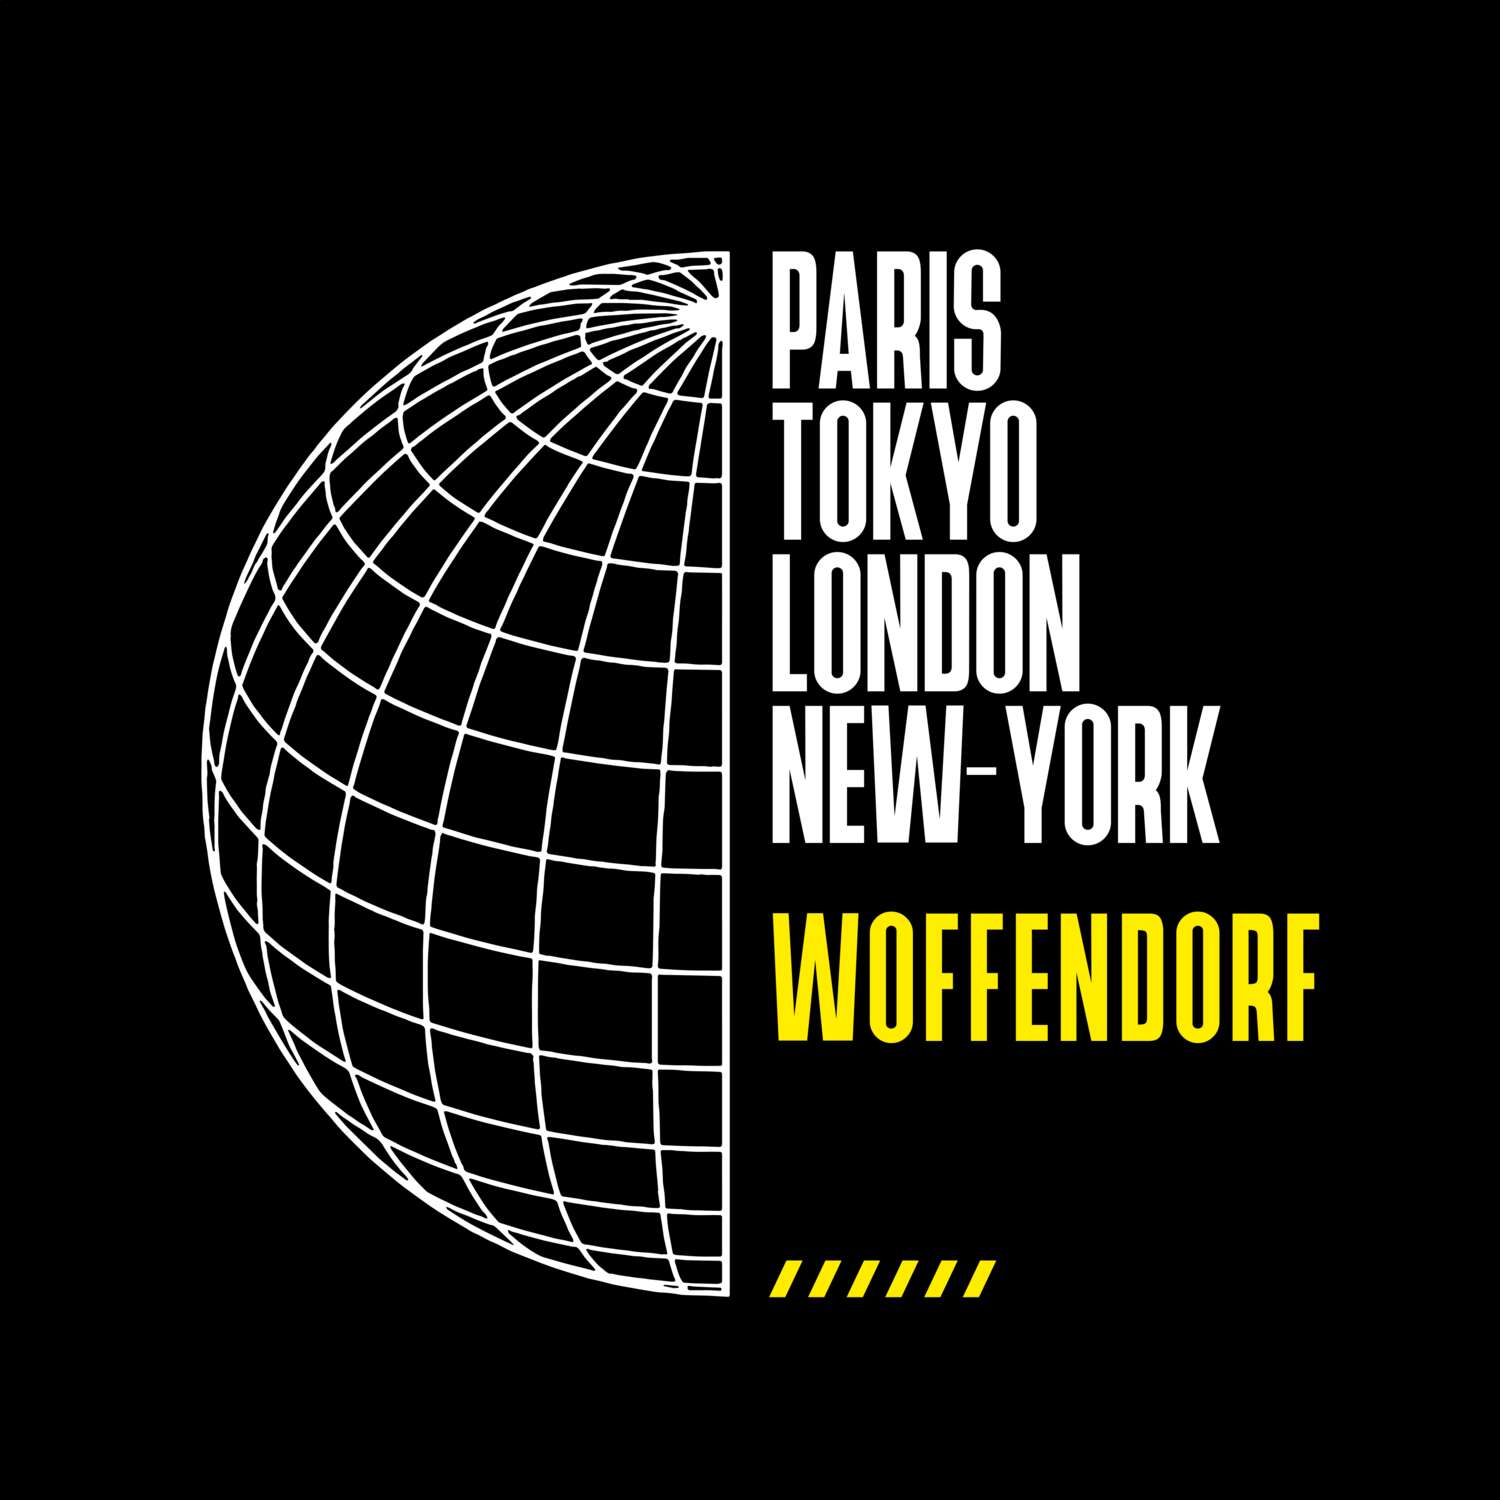 Woffendorf T-Shirt »Paris Tokyo London«